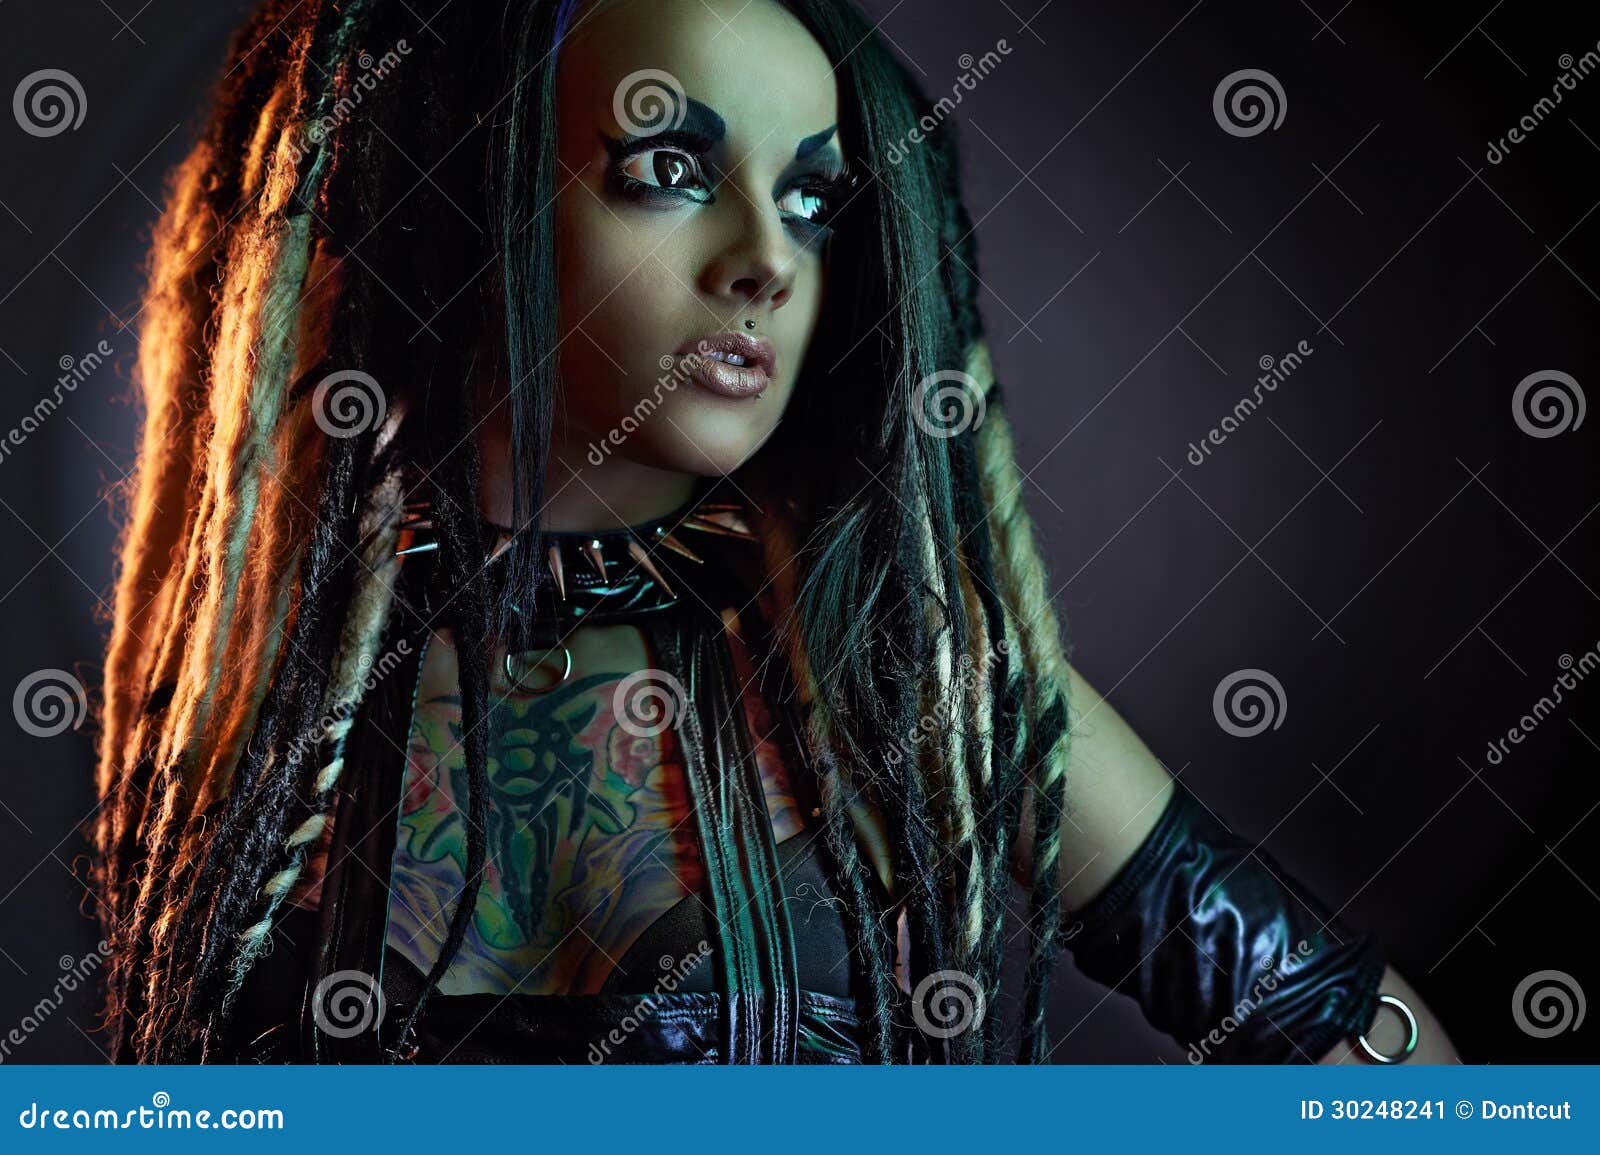 Beautiful Demon Girl With Black Eyes Stock Image Image Of Face Girl 30248241 - black eyeshadow for demon girl eyes roblox